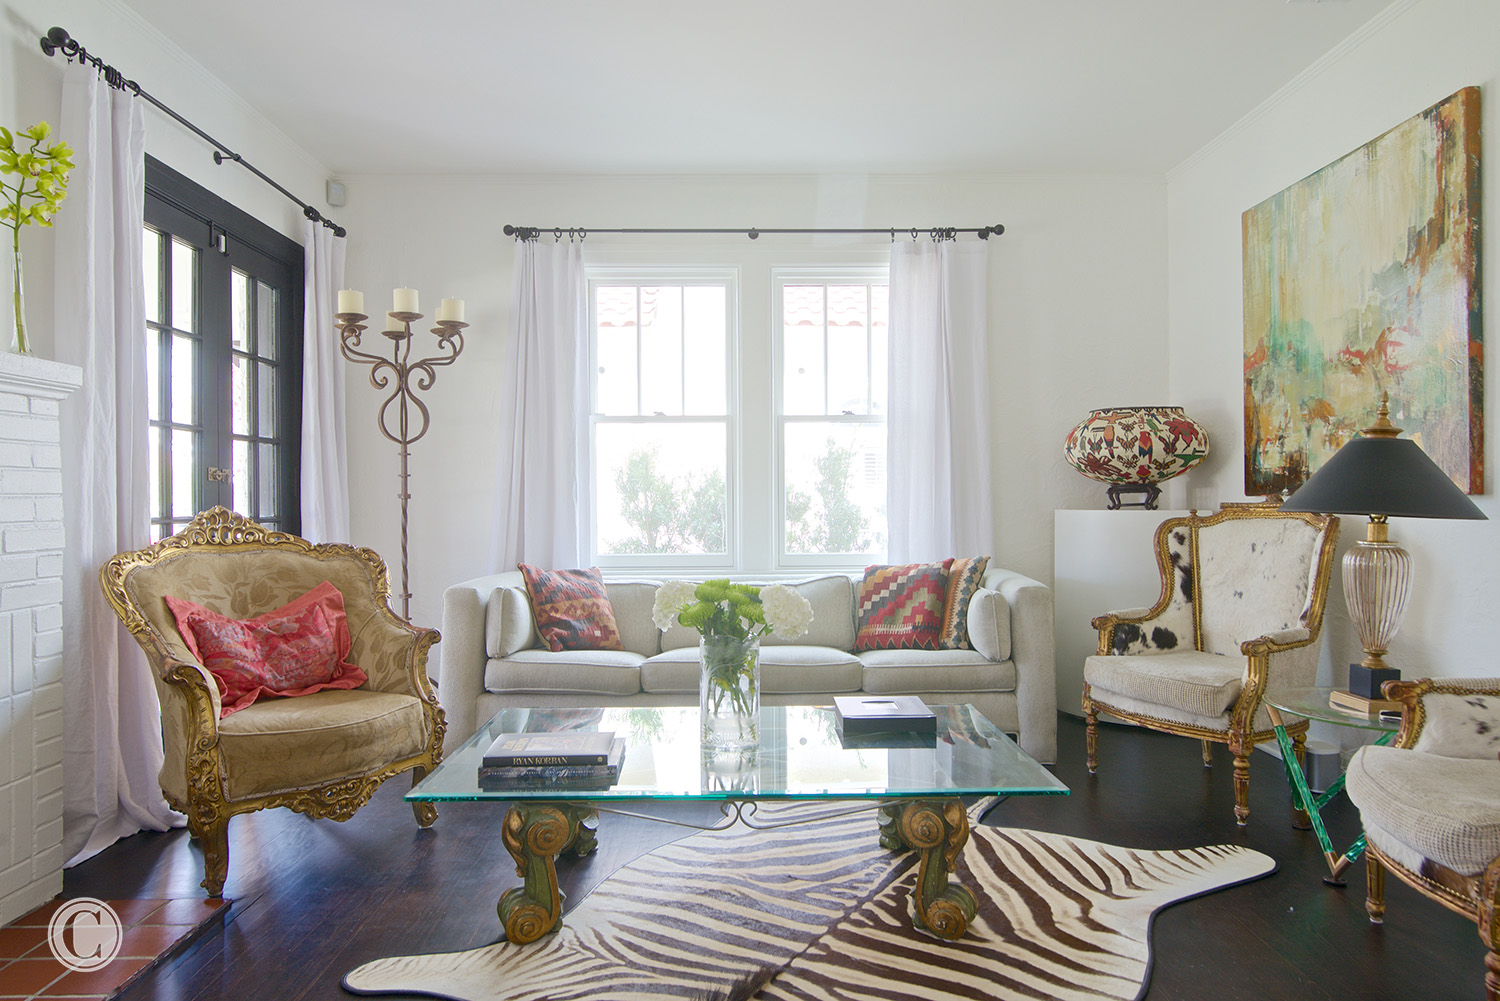 Home renovation – Living Room, San Marco, Jacksonville, FL ©Wally Sears Photography